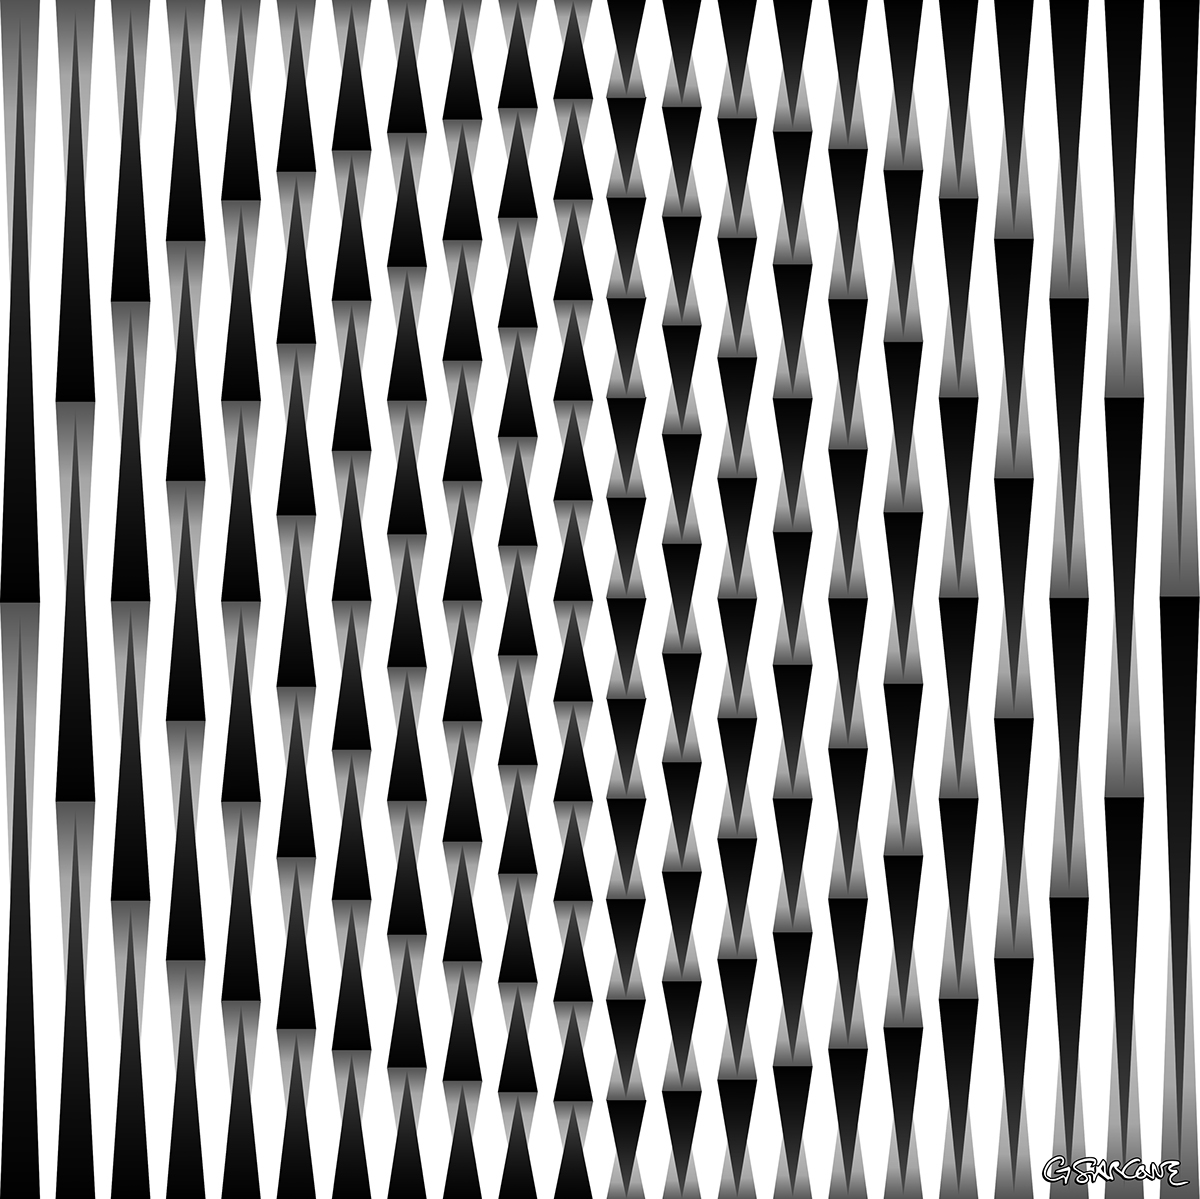 autokinetic optical illusions visual effect illusion gianni sarcone book Project